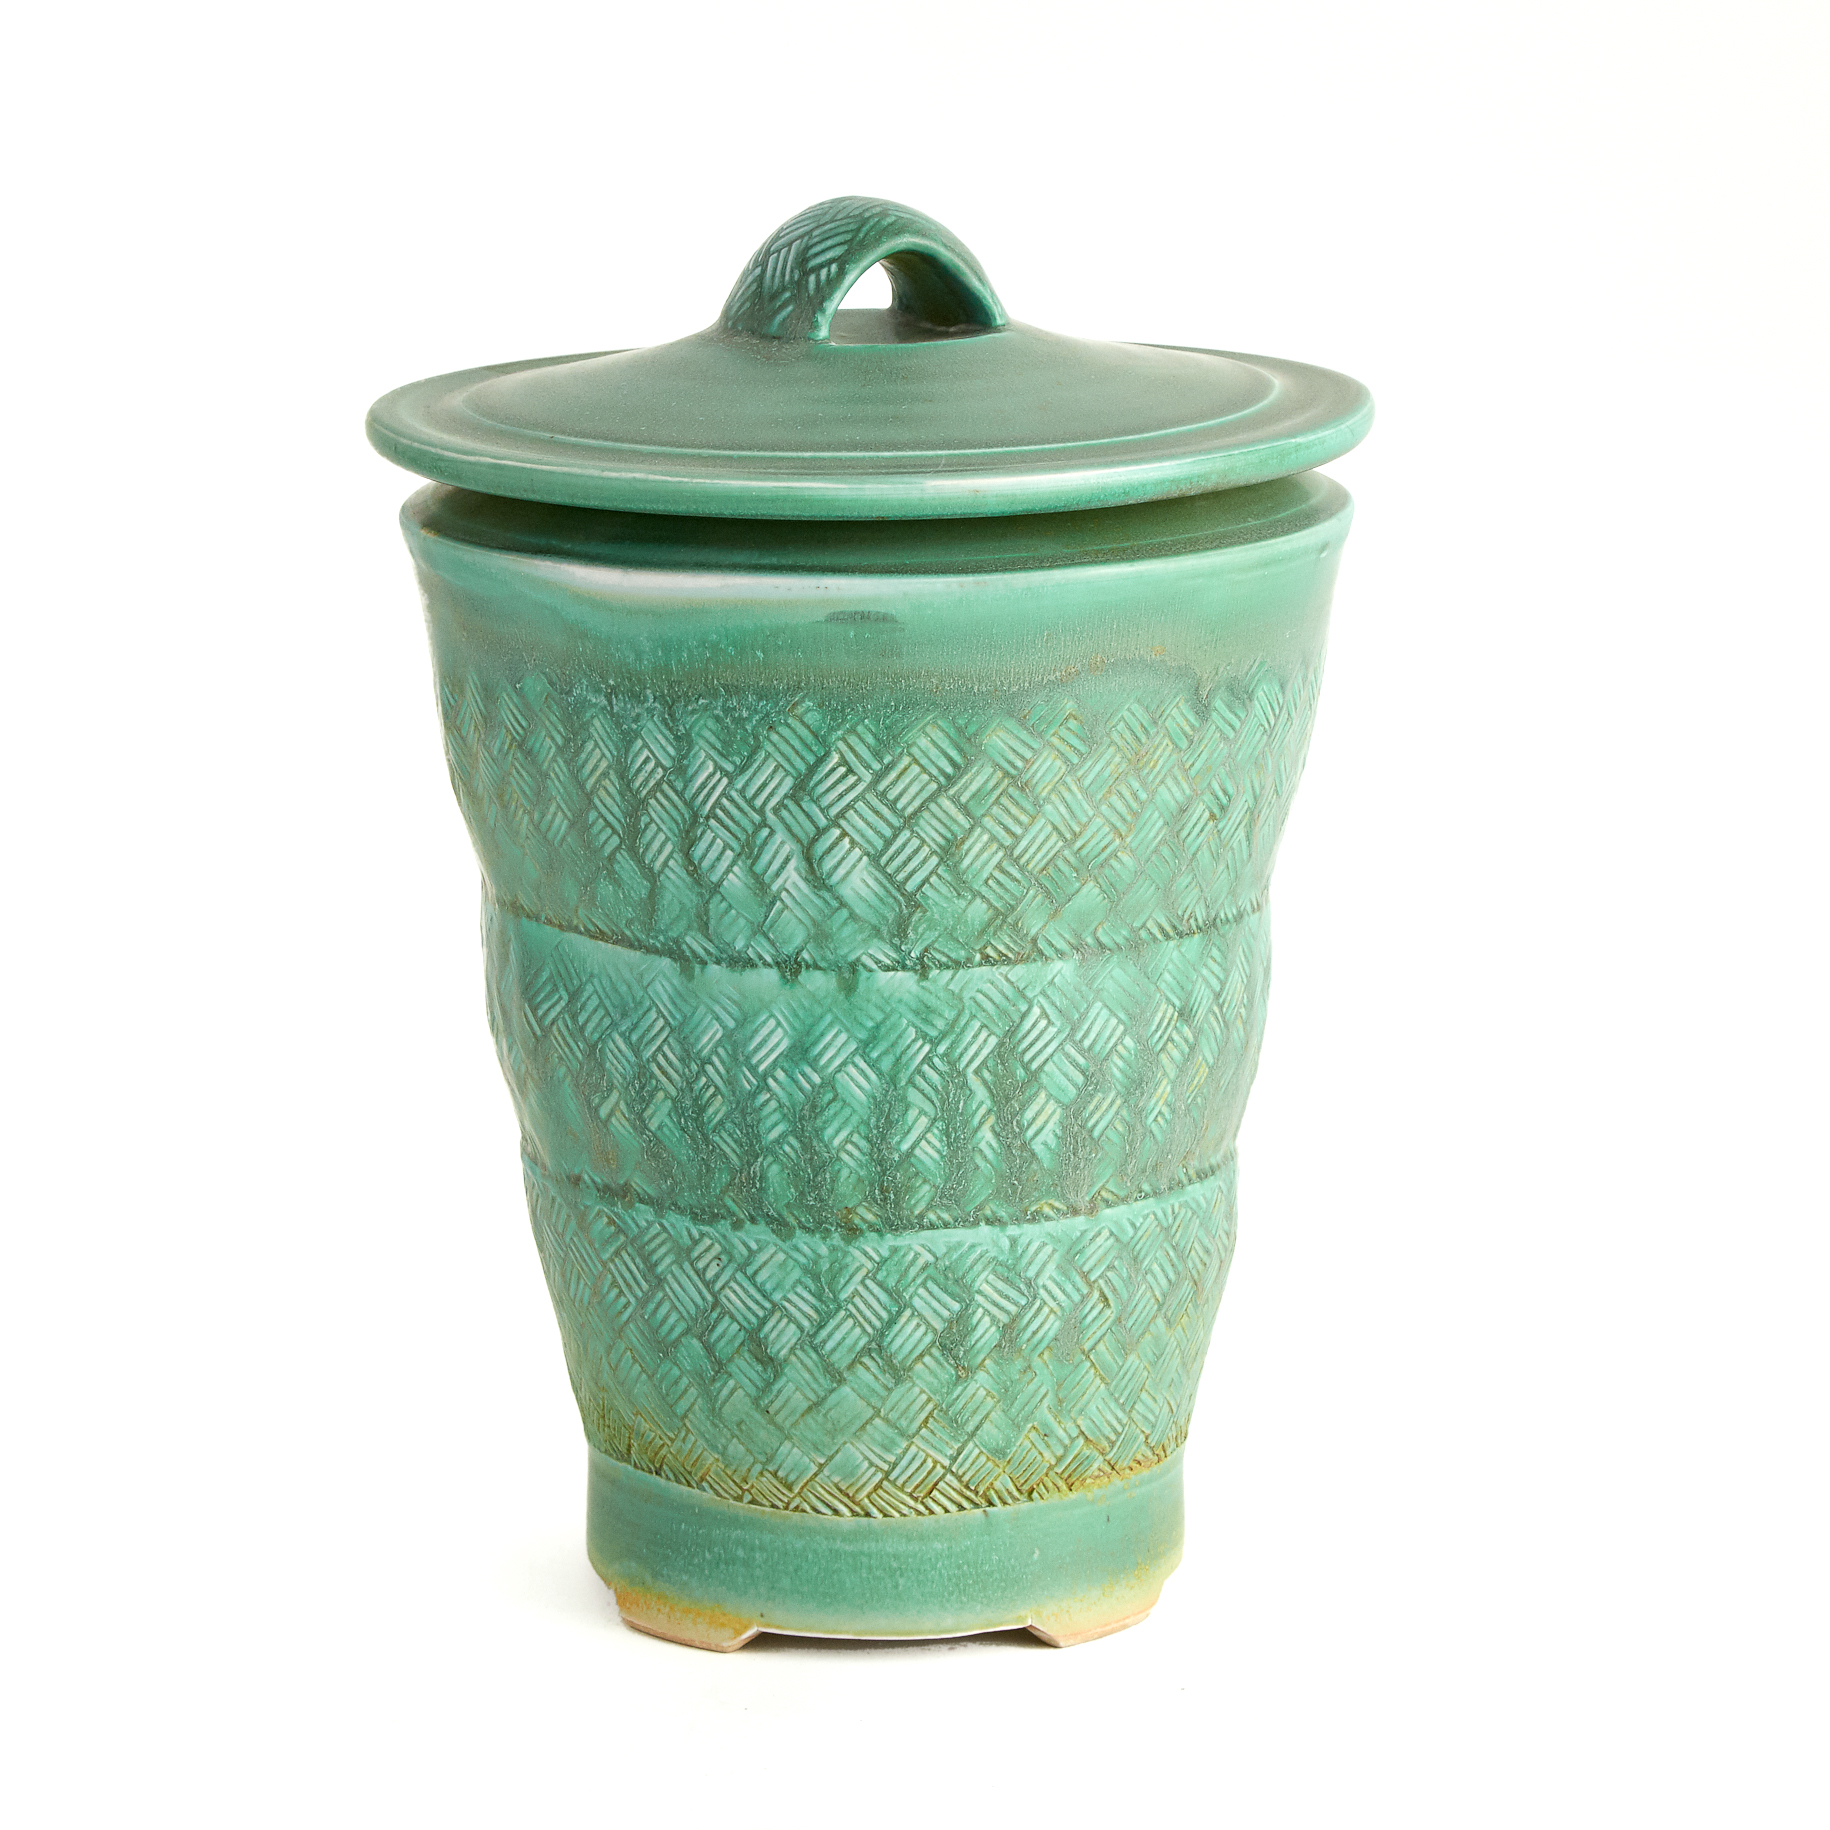 Bruce Cochrane (Canadian, b.1953), Green Glazed Stoneware Covered Jar, c.2008